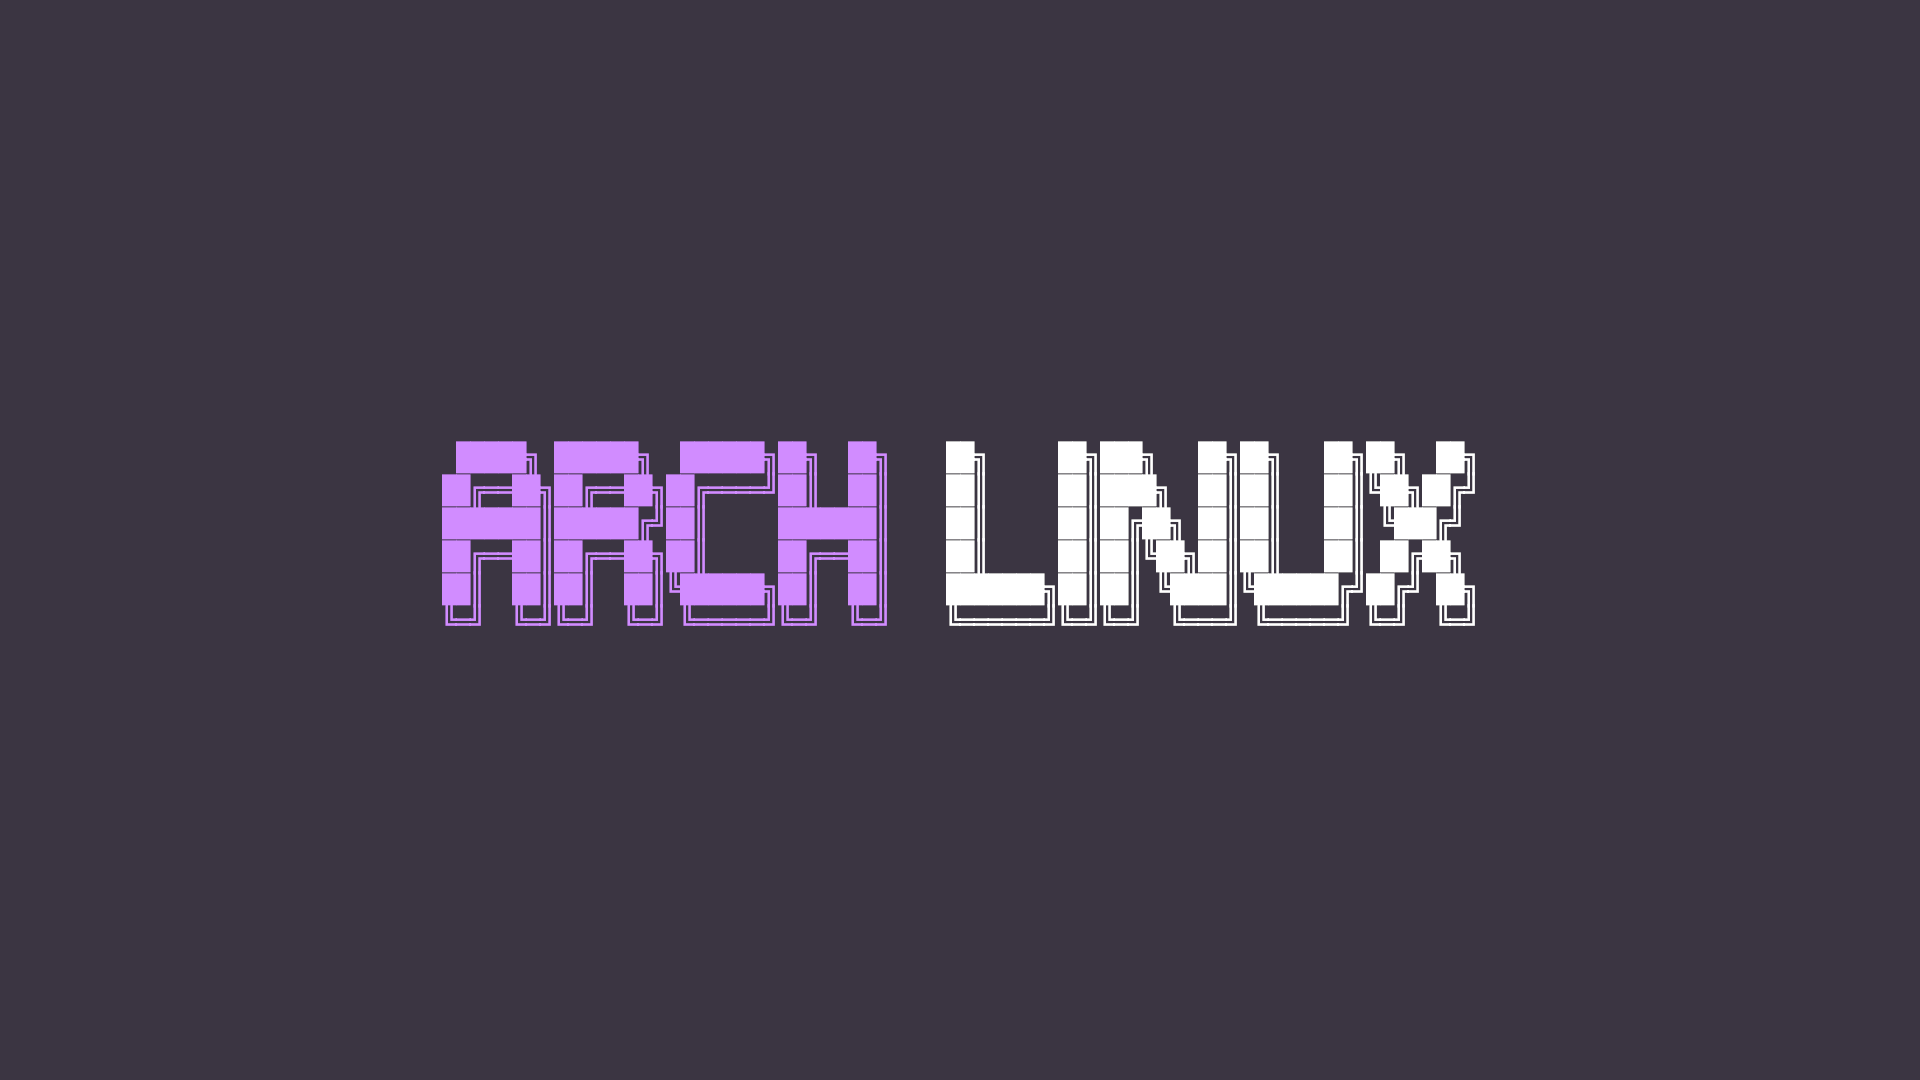 General 1920x1080 Arch Linux ASCII art purple simple background digital art terminal minimalism